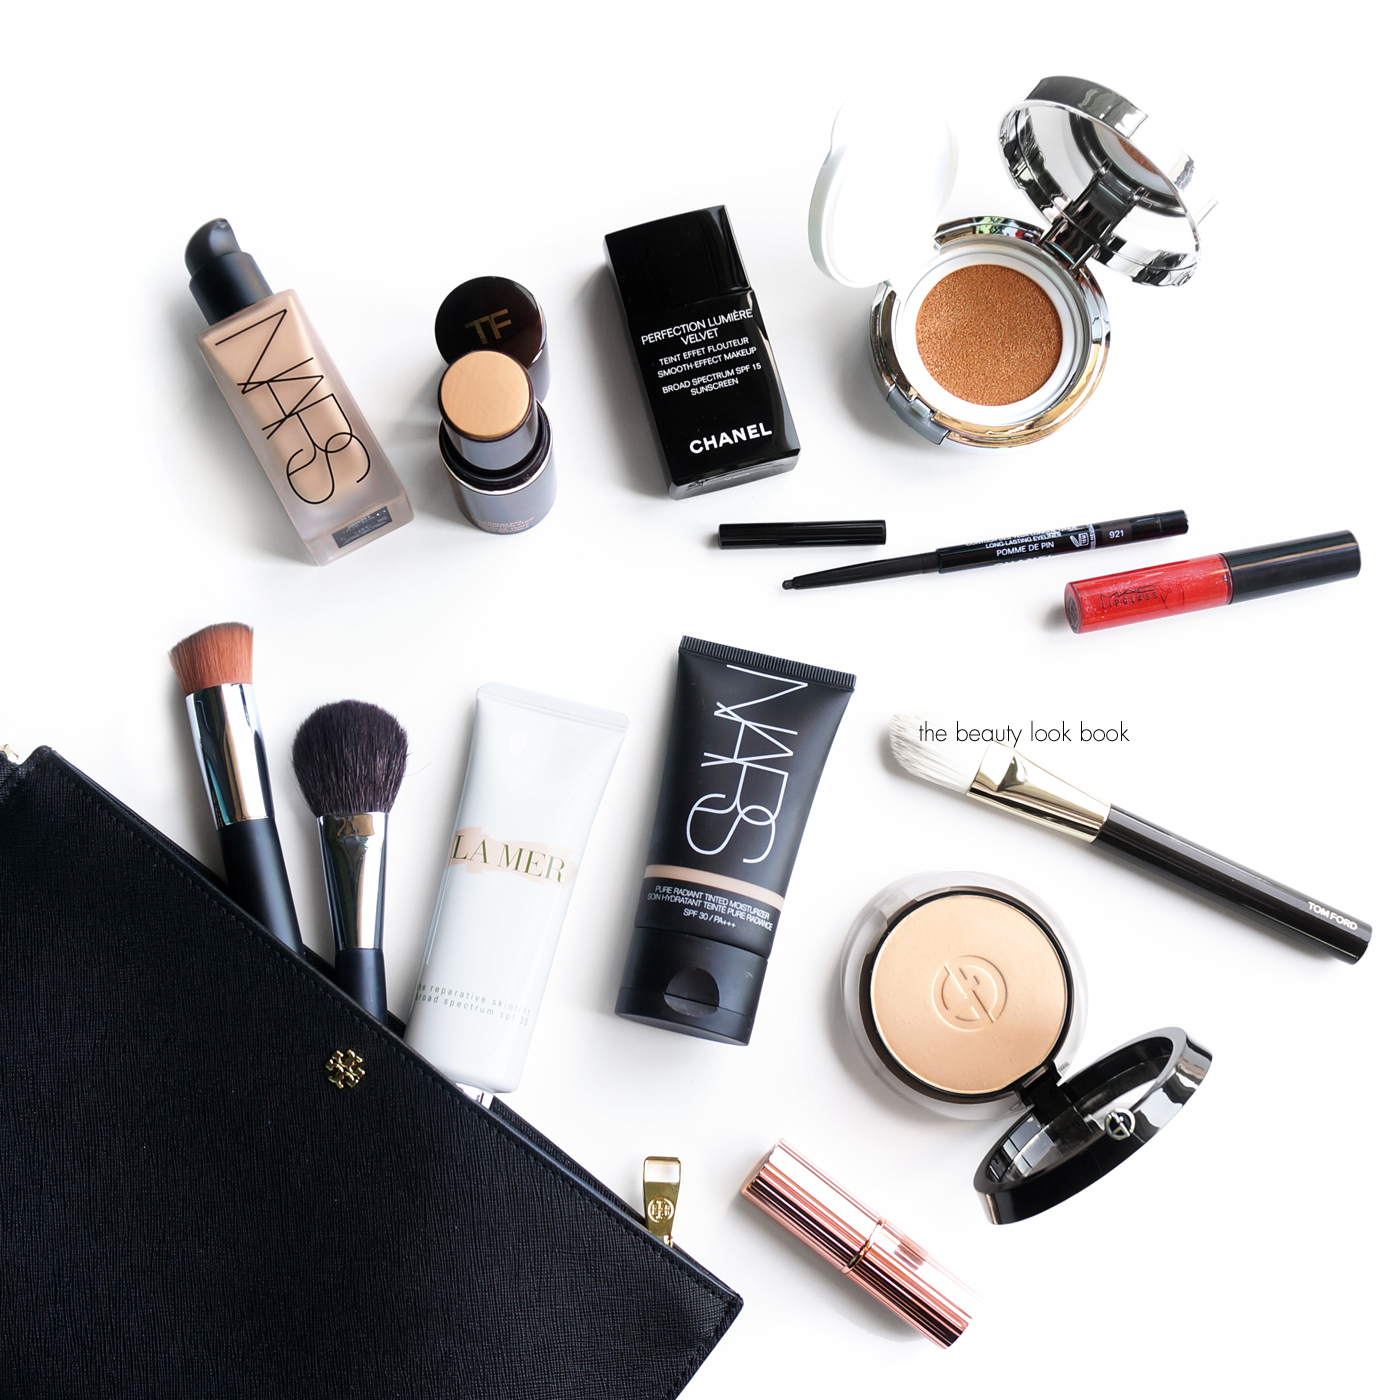 CHANEL, Makeup, Chanel Sublimage Le Teint Foundation 2 Beige 5oz Brand  New